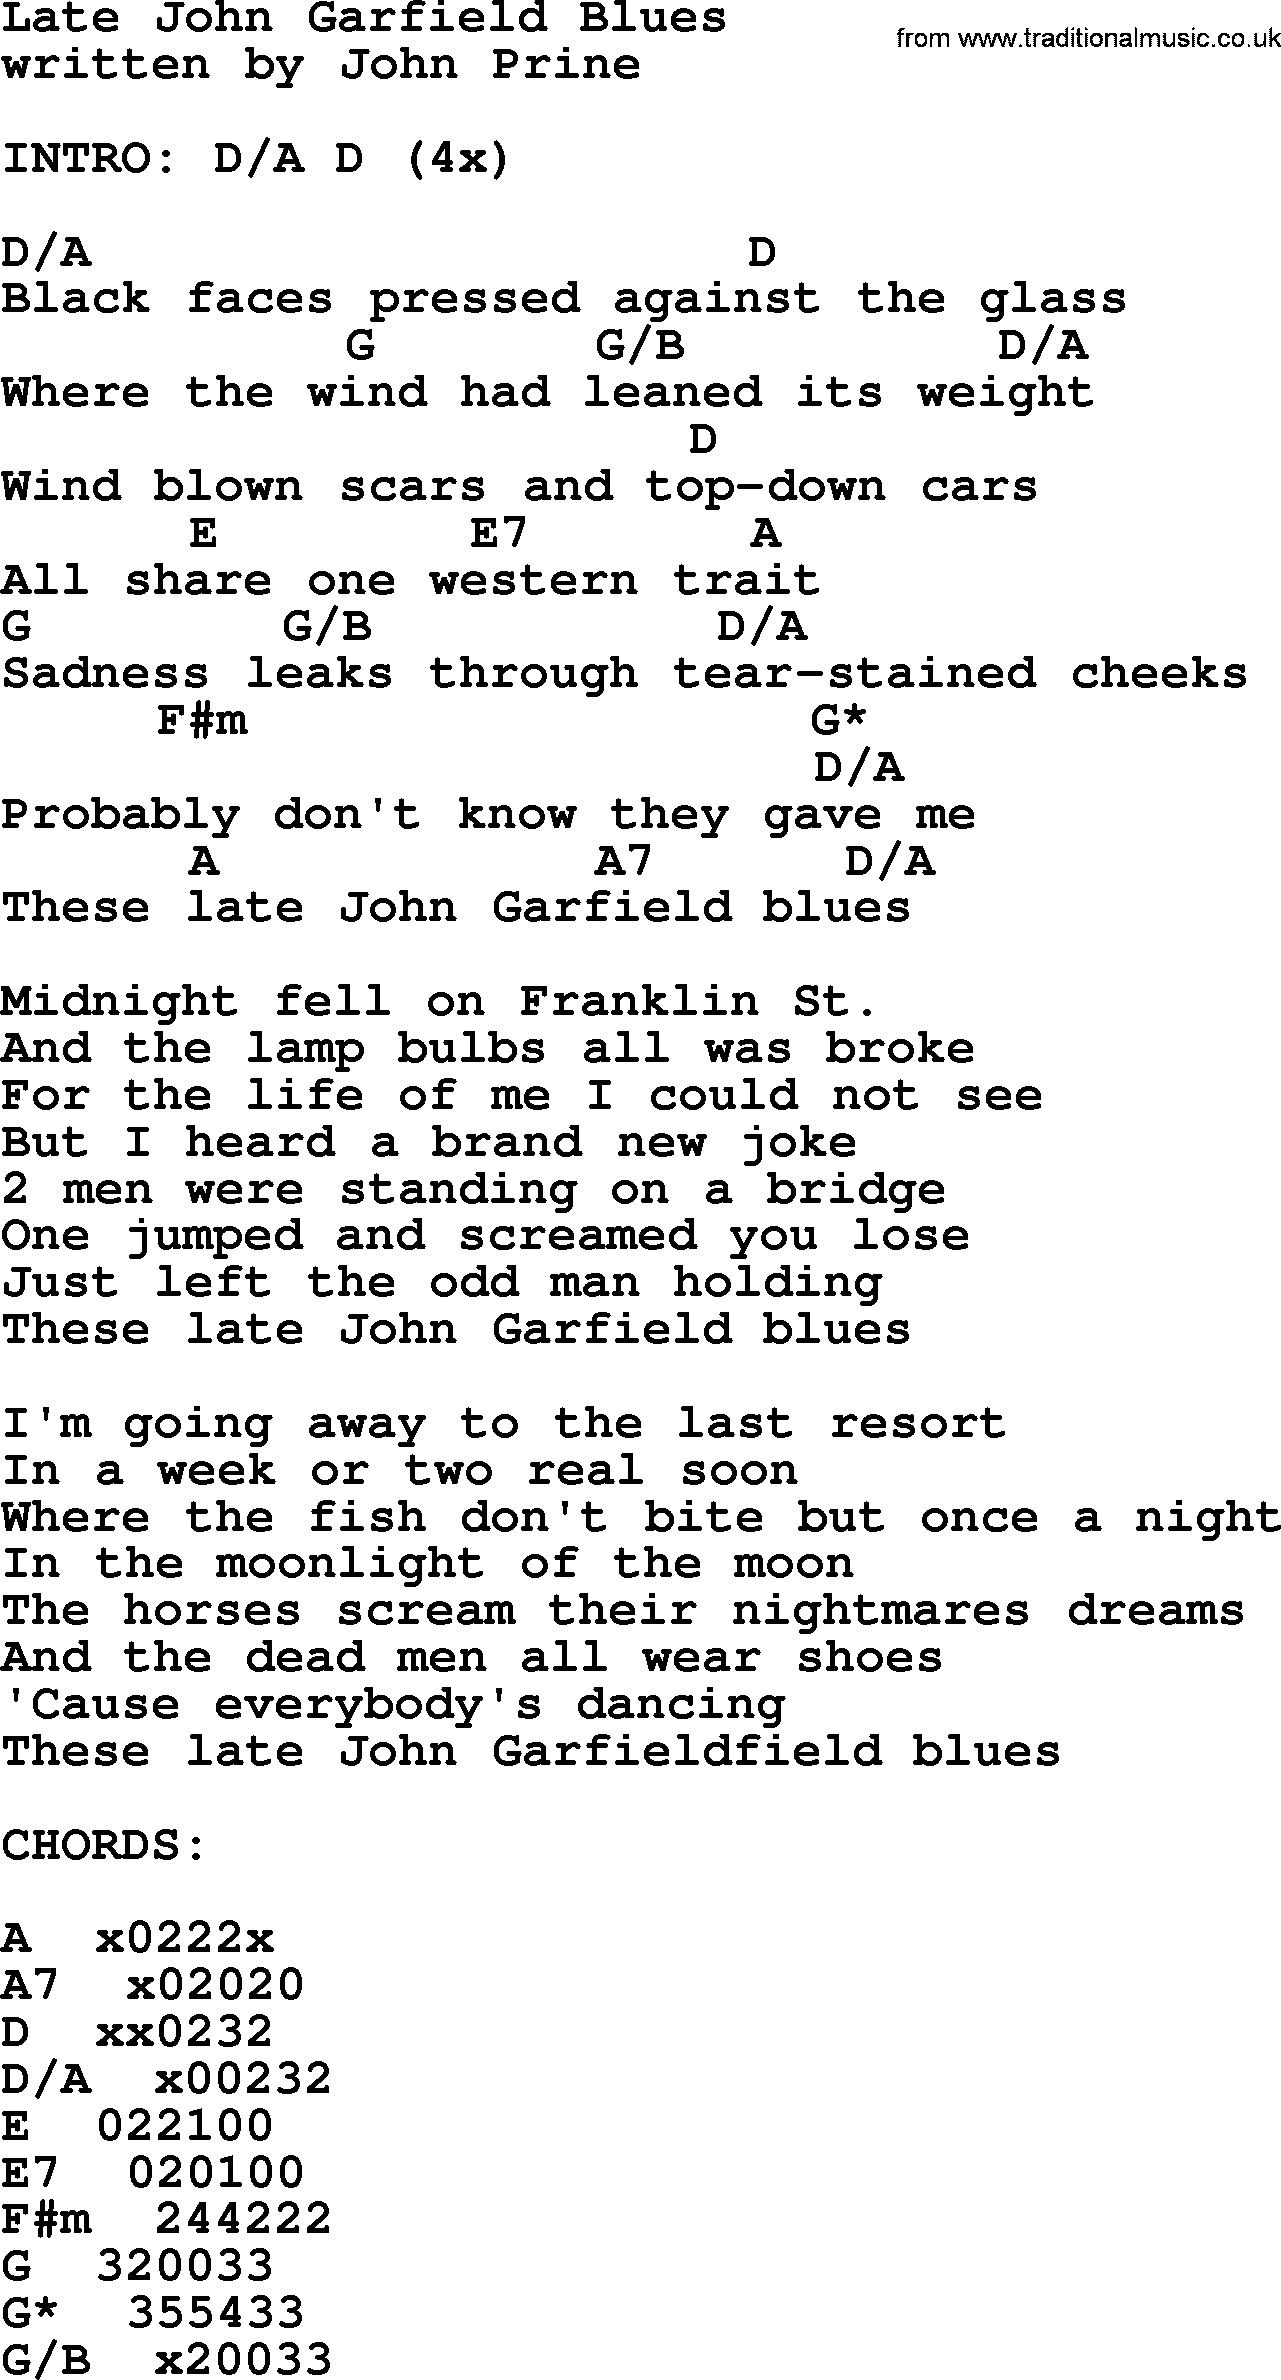 Kris Kristofferson song: Late John Garfield Blues lyrics and chords